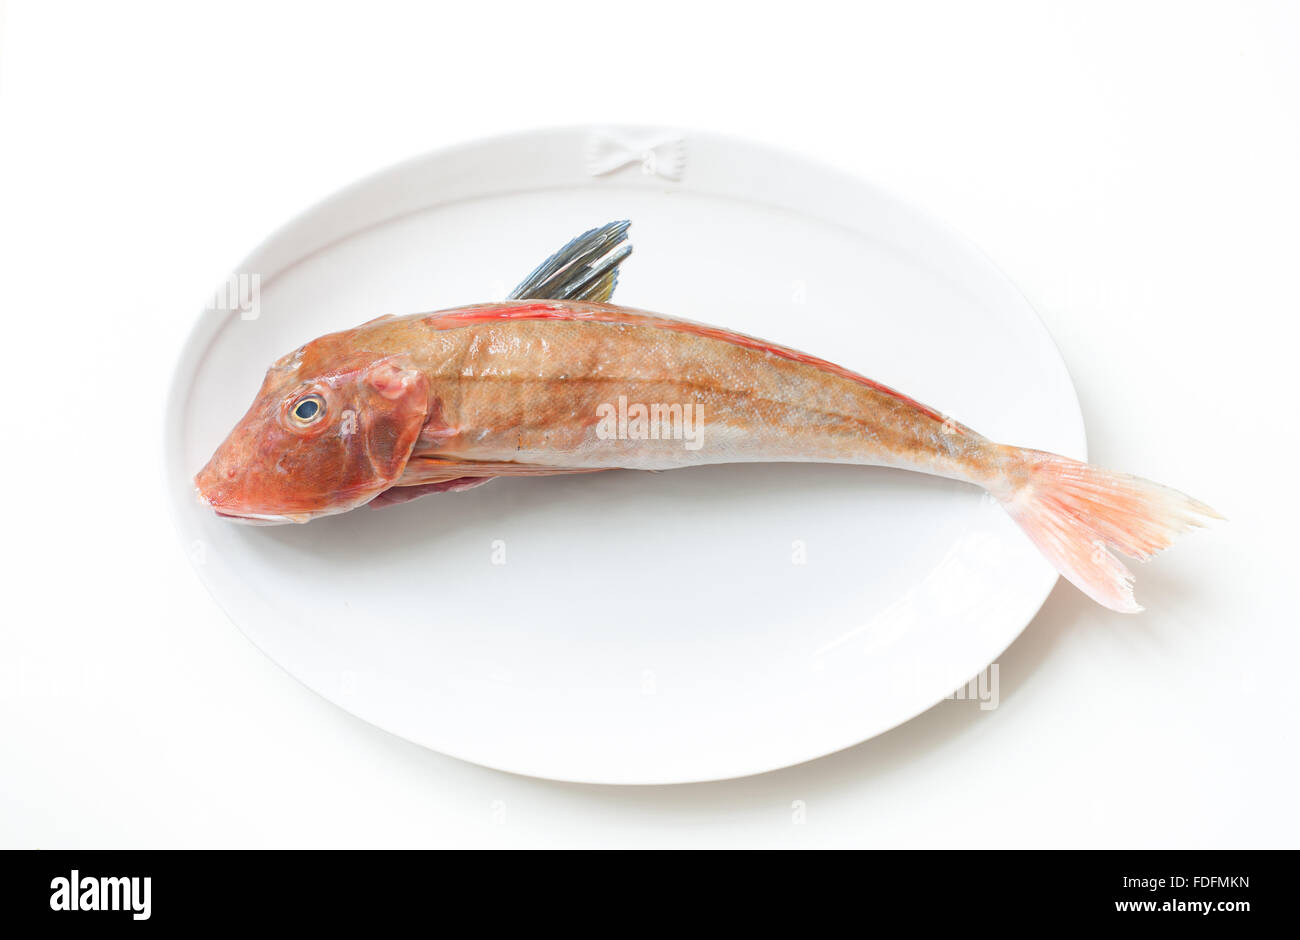 Tub gurnard raw fish on  white plate Stock Photo